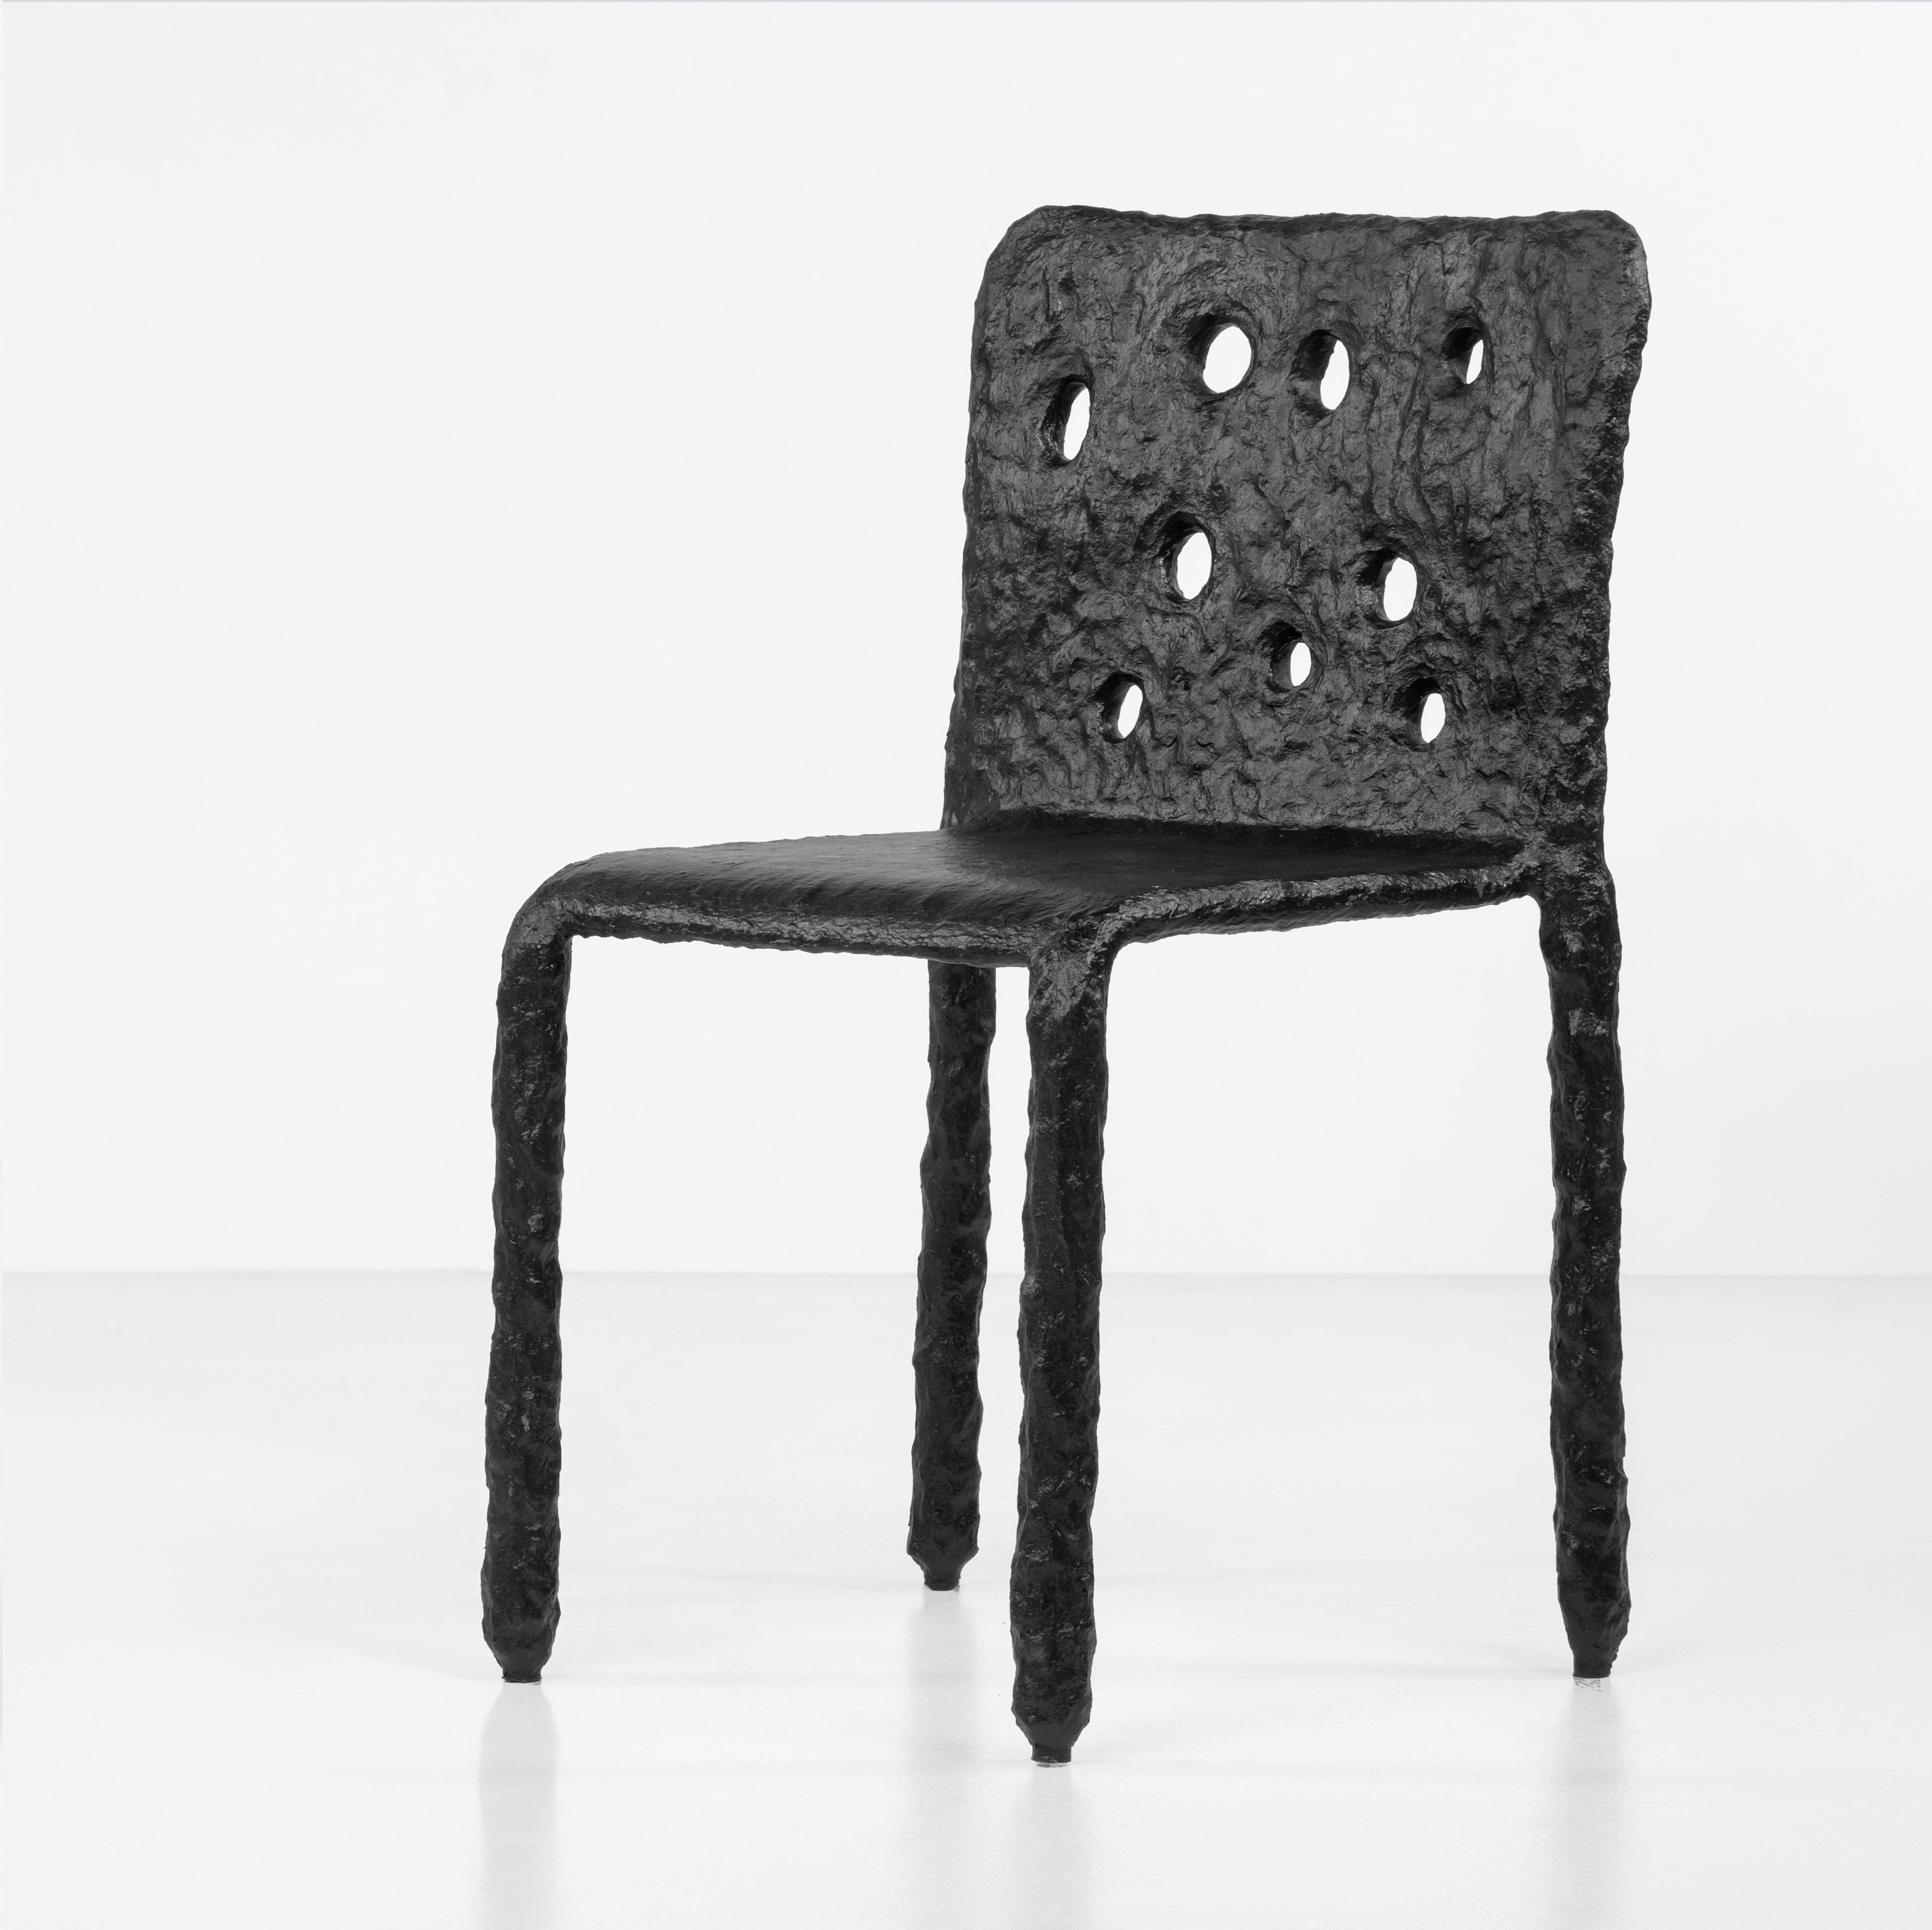 Ukrainian Sculpted Indoor Contemporary Chair by FAINA